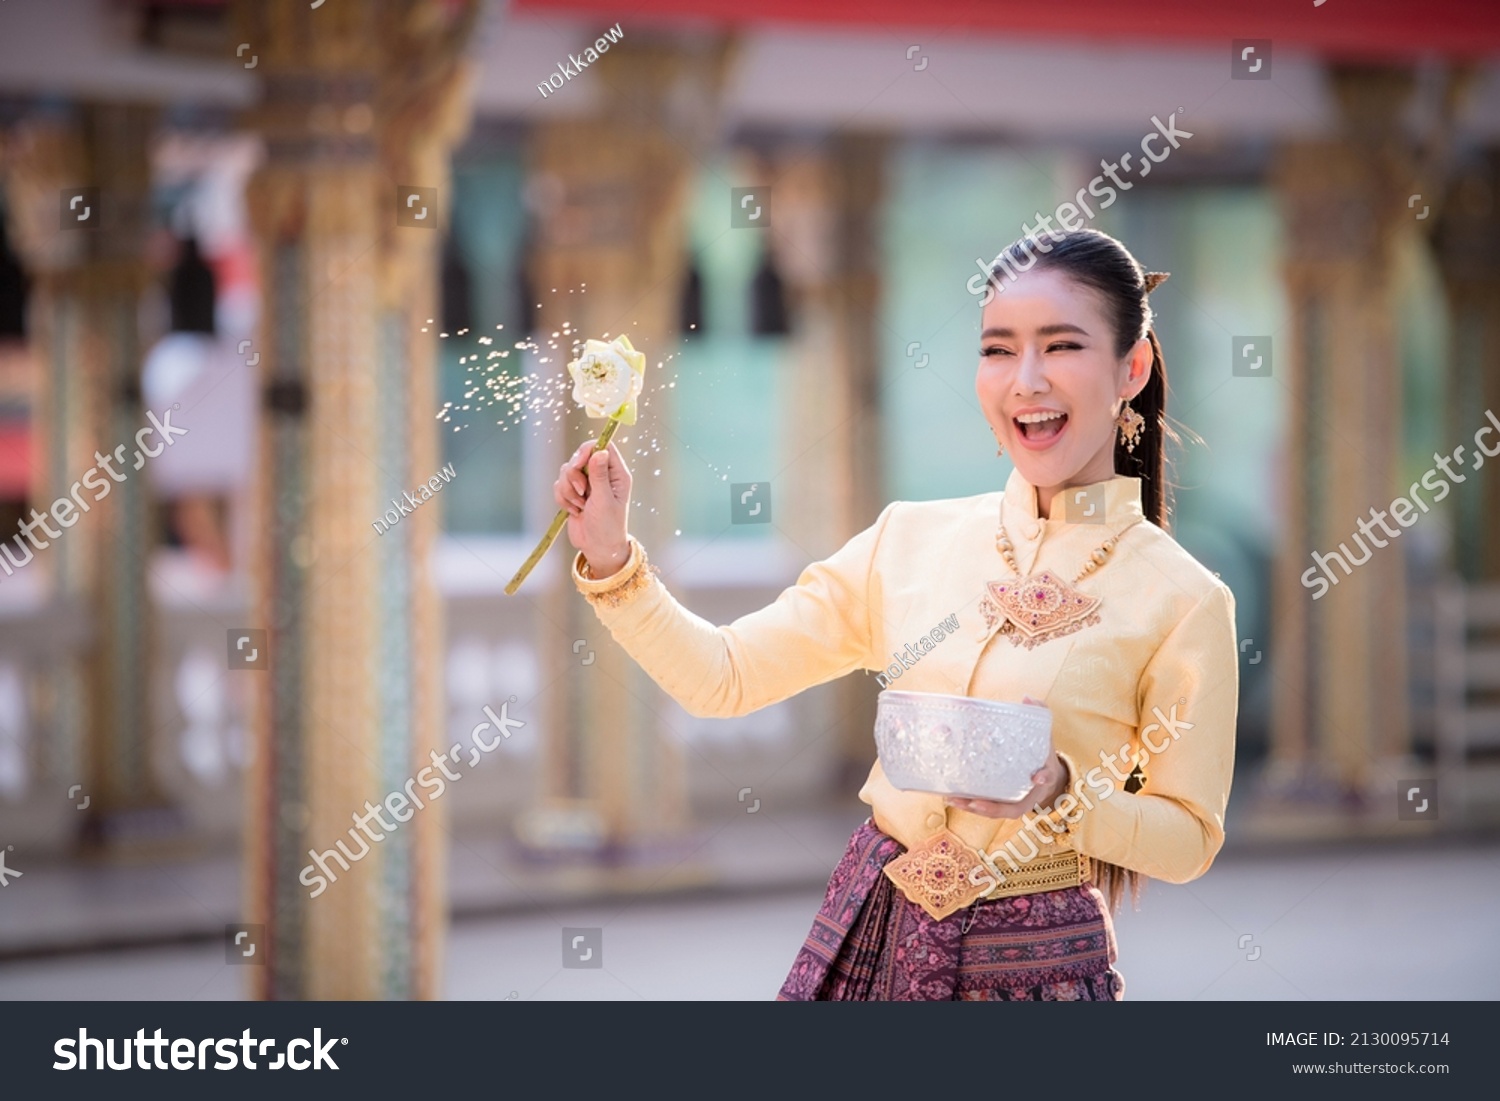 Songkran Stock Photos, Images & Photography | Shutterstock